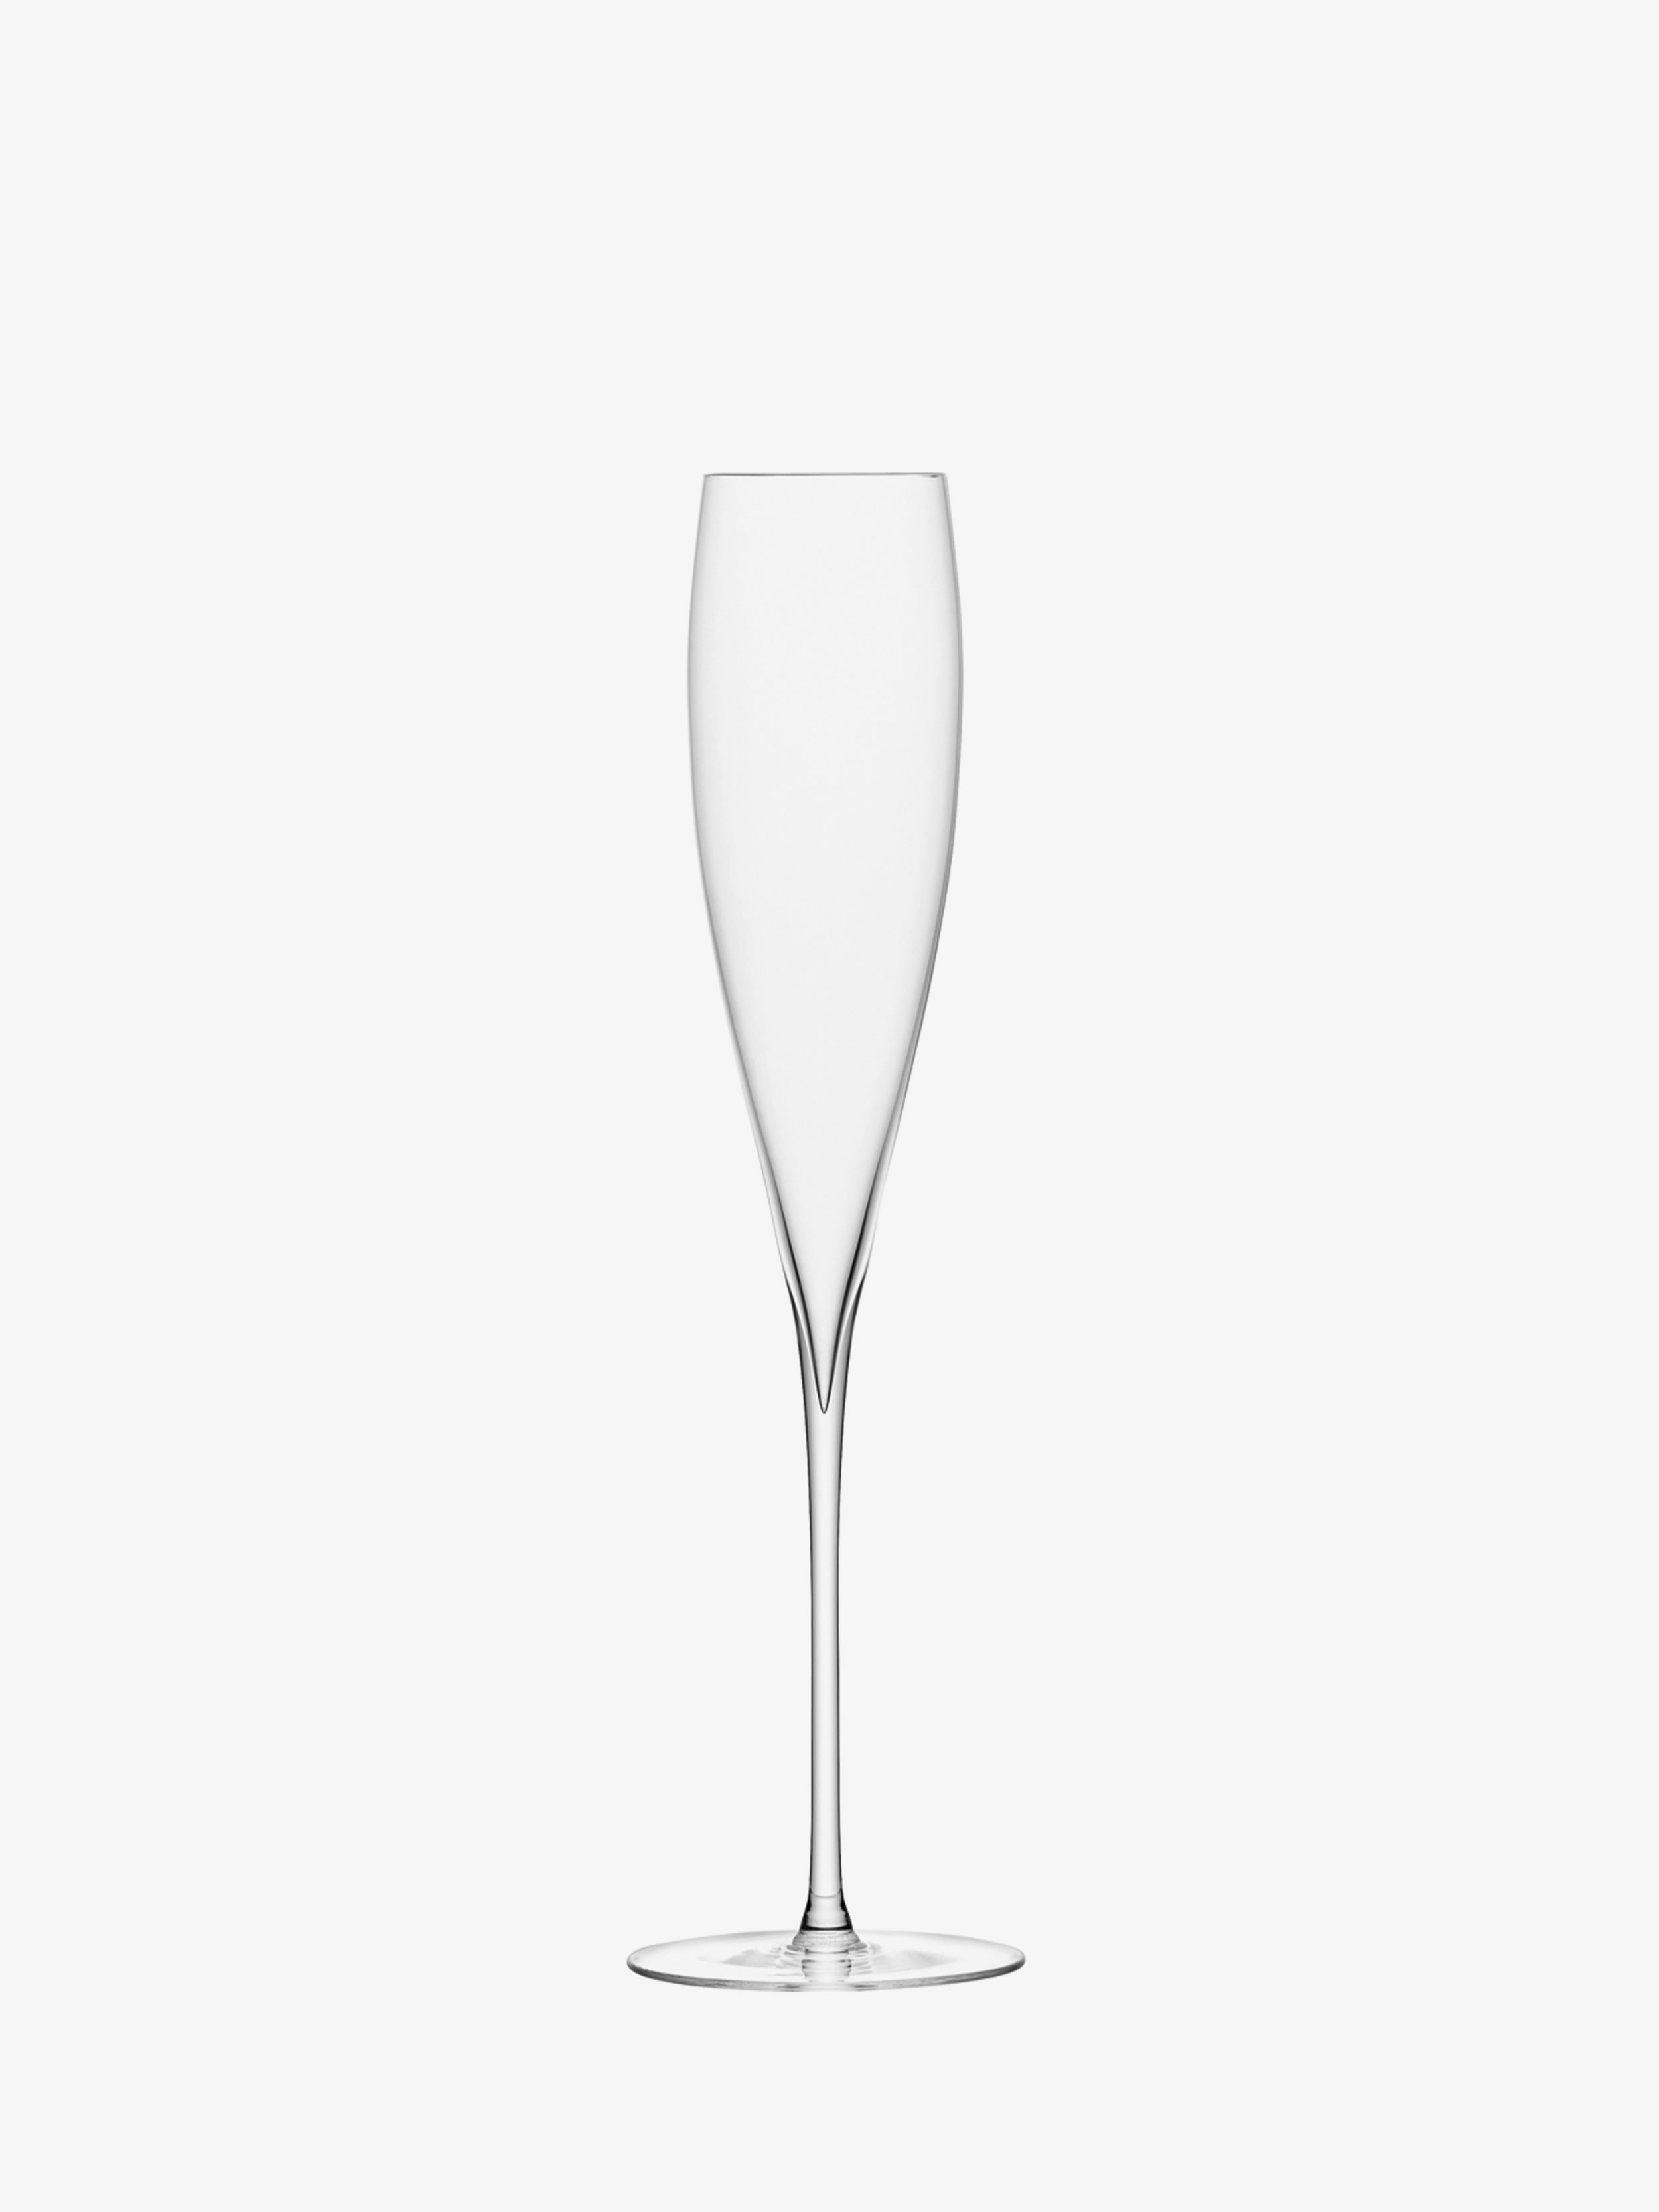 Champagne Flute x 2 7oz, Clear, Savoy